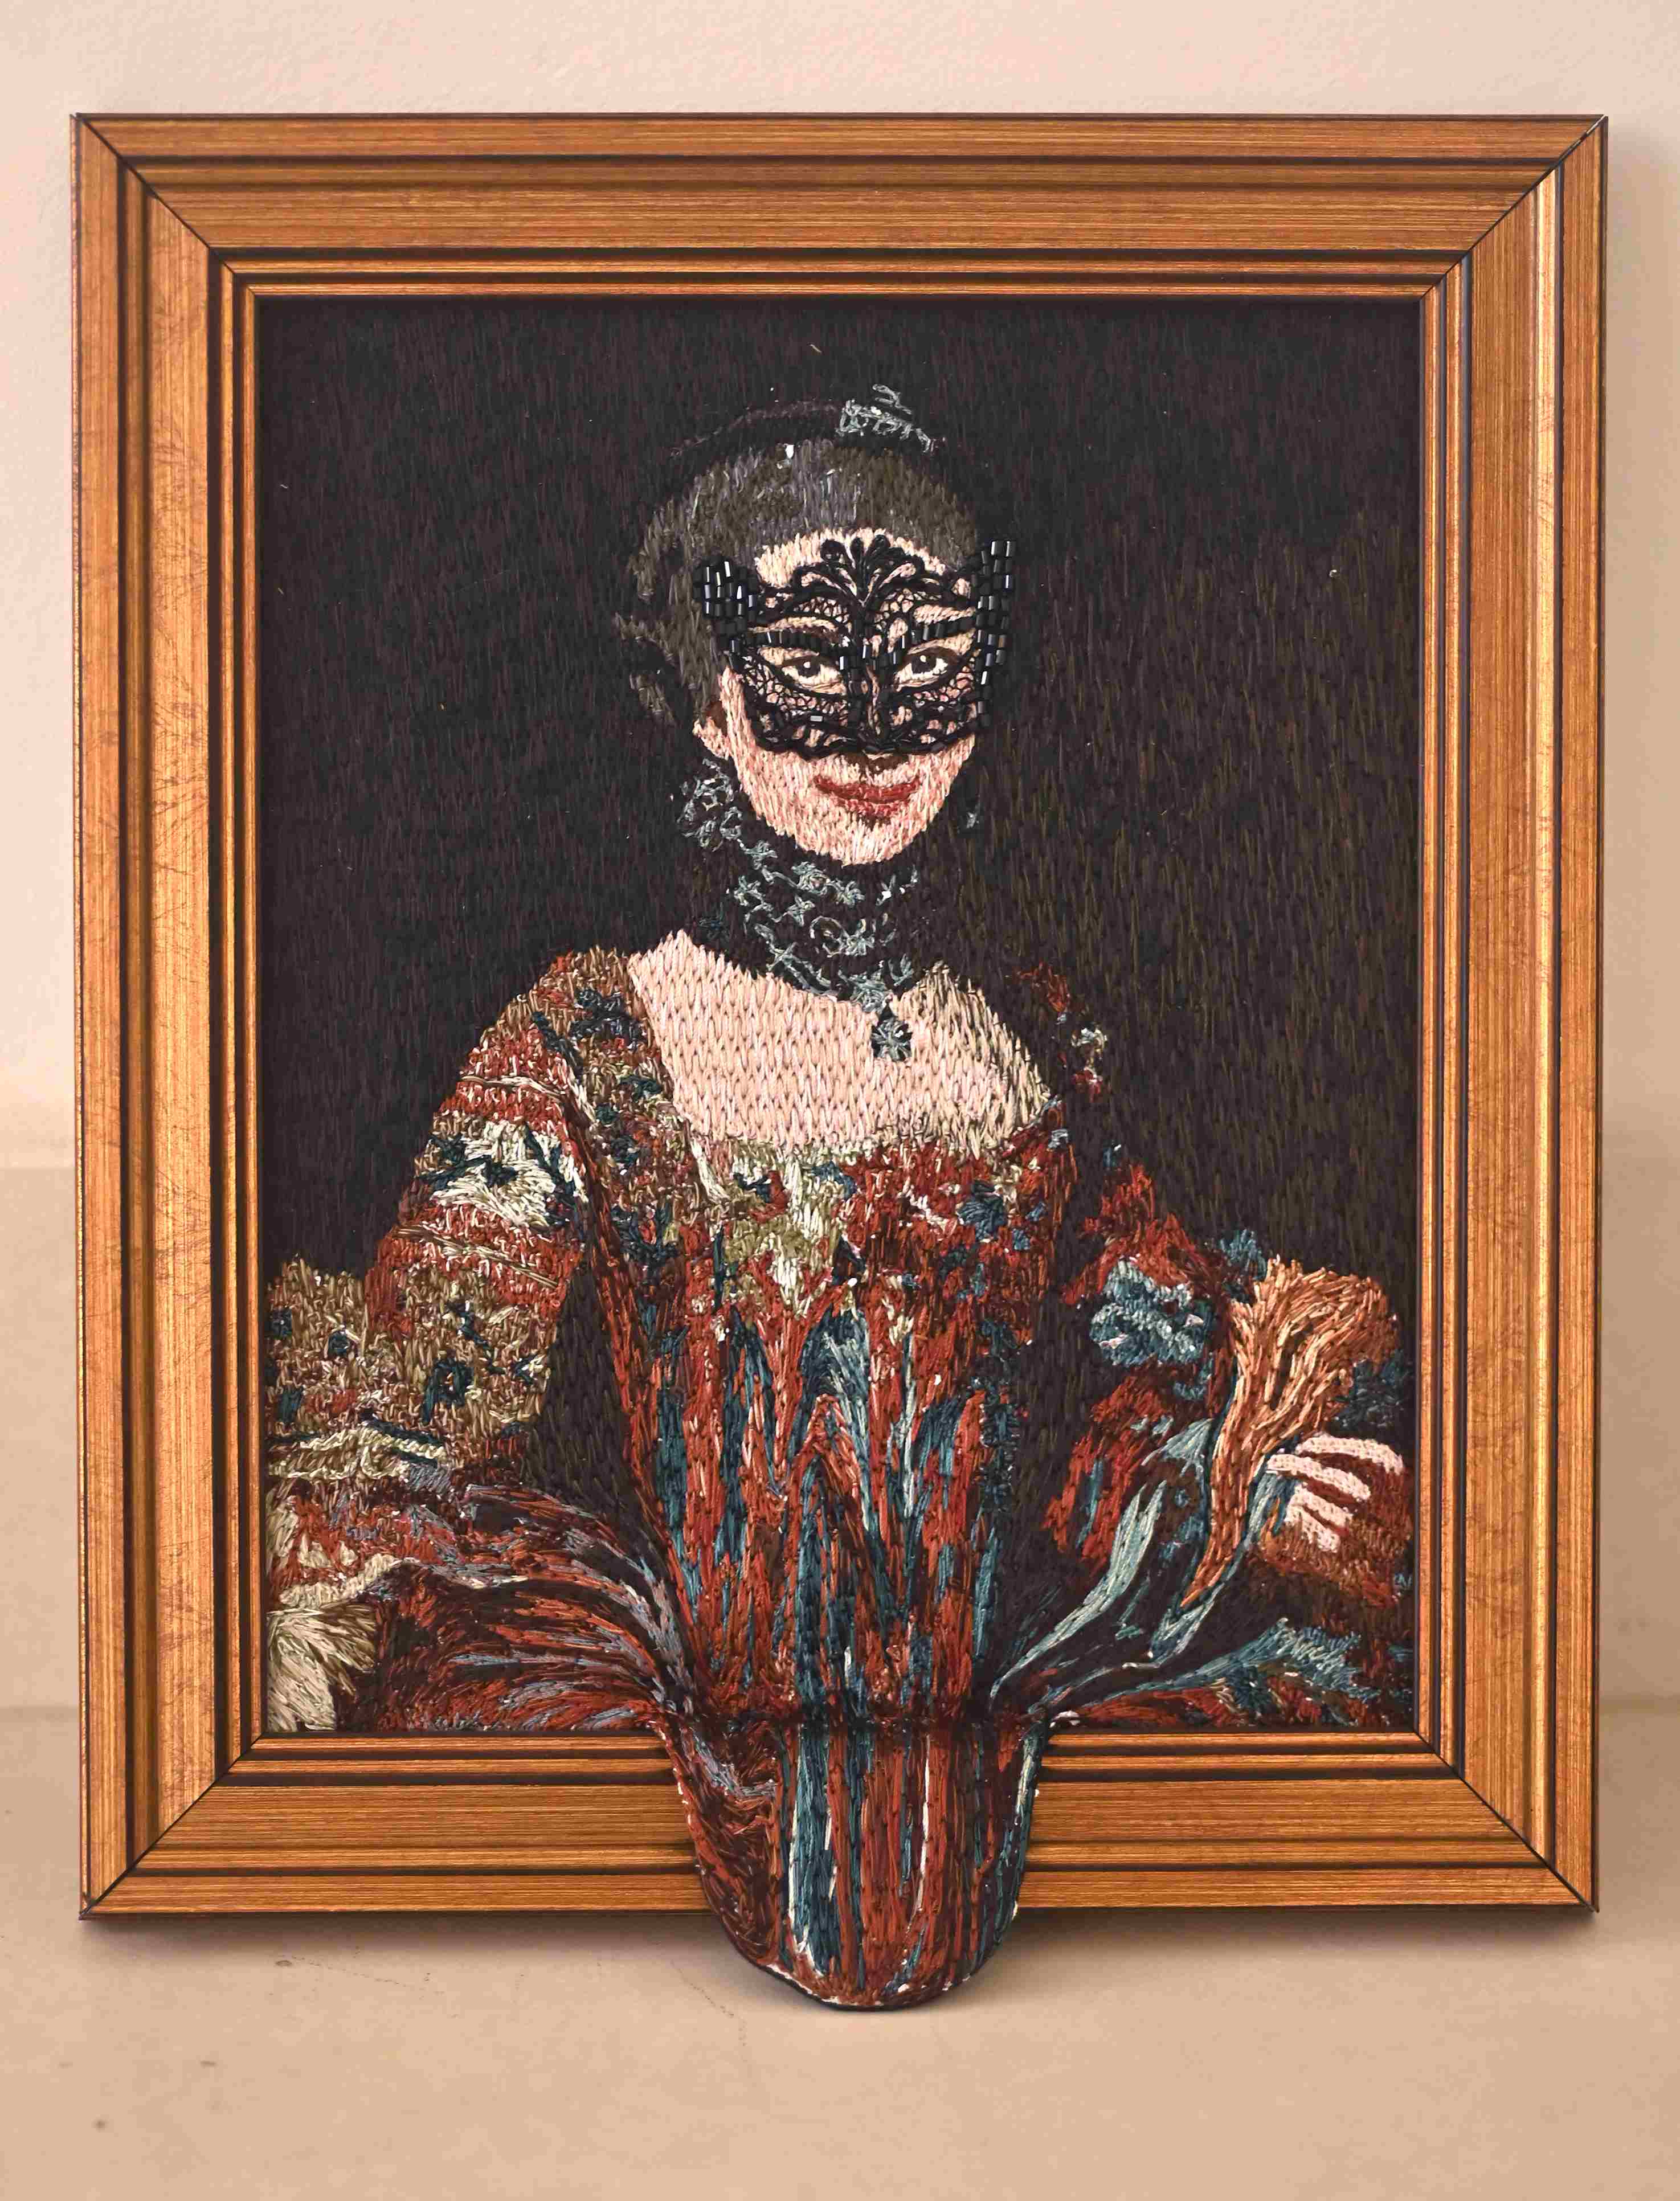 Artist: Marium Agha<br>Name: Woman Who Play<br>Medium: Thread on fabric<br> Size: 10 x 15 inches